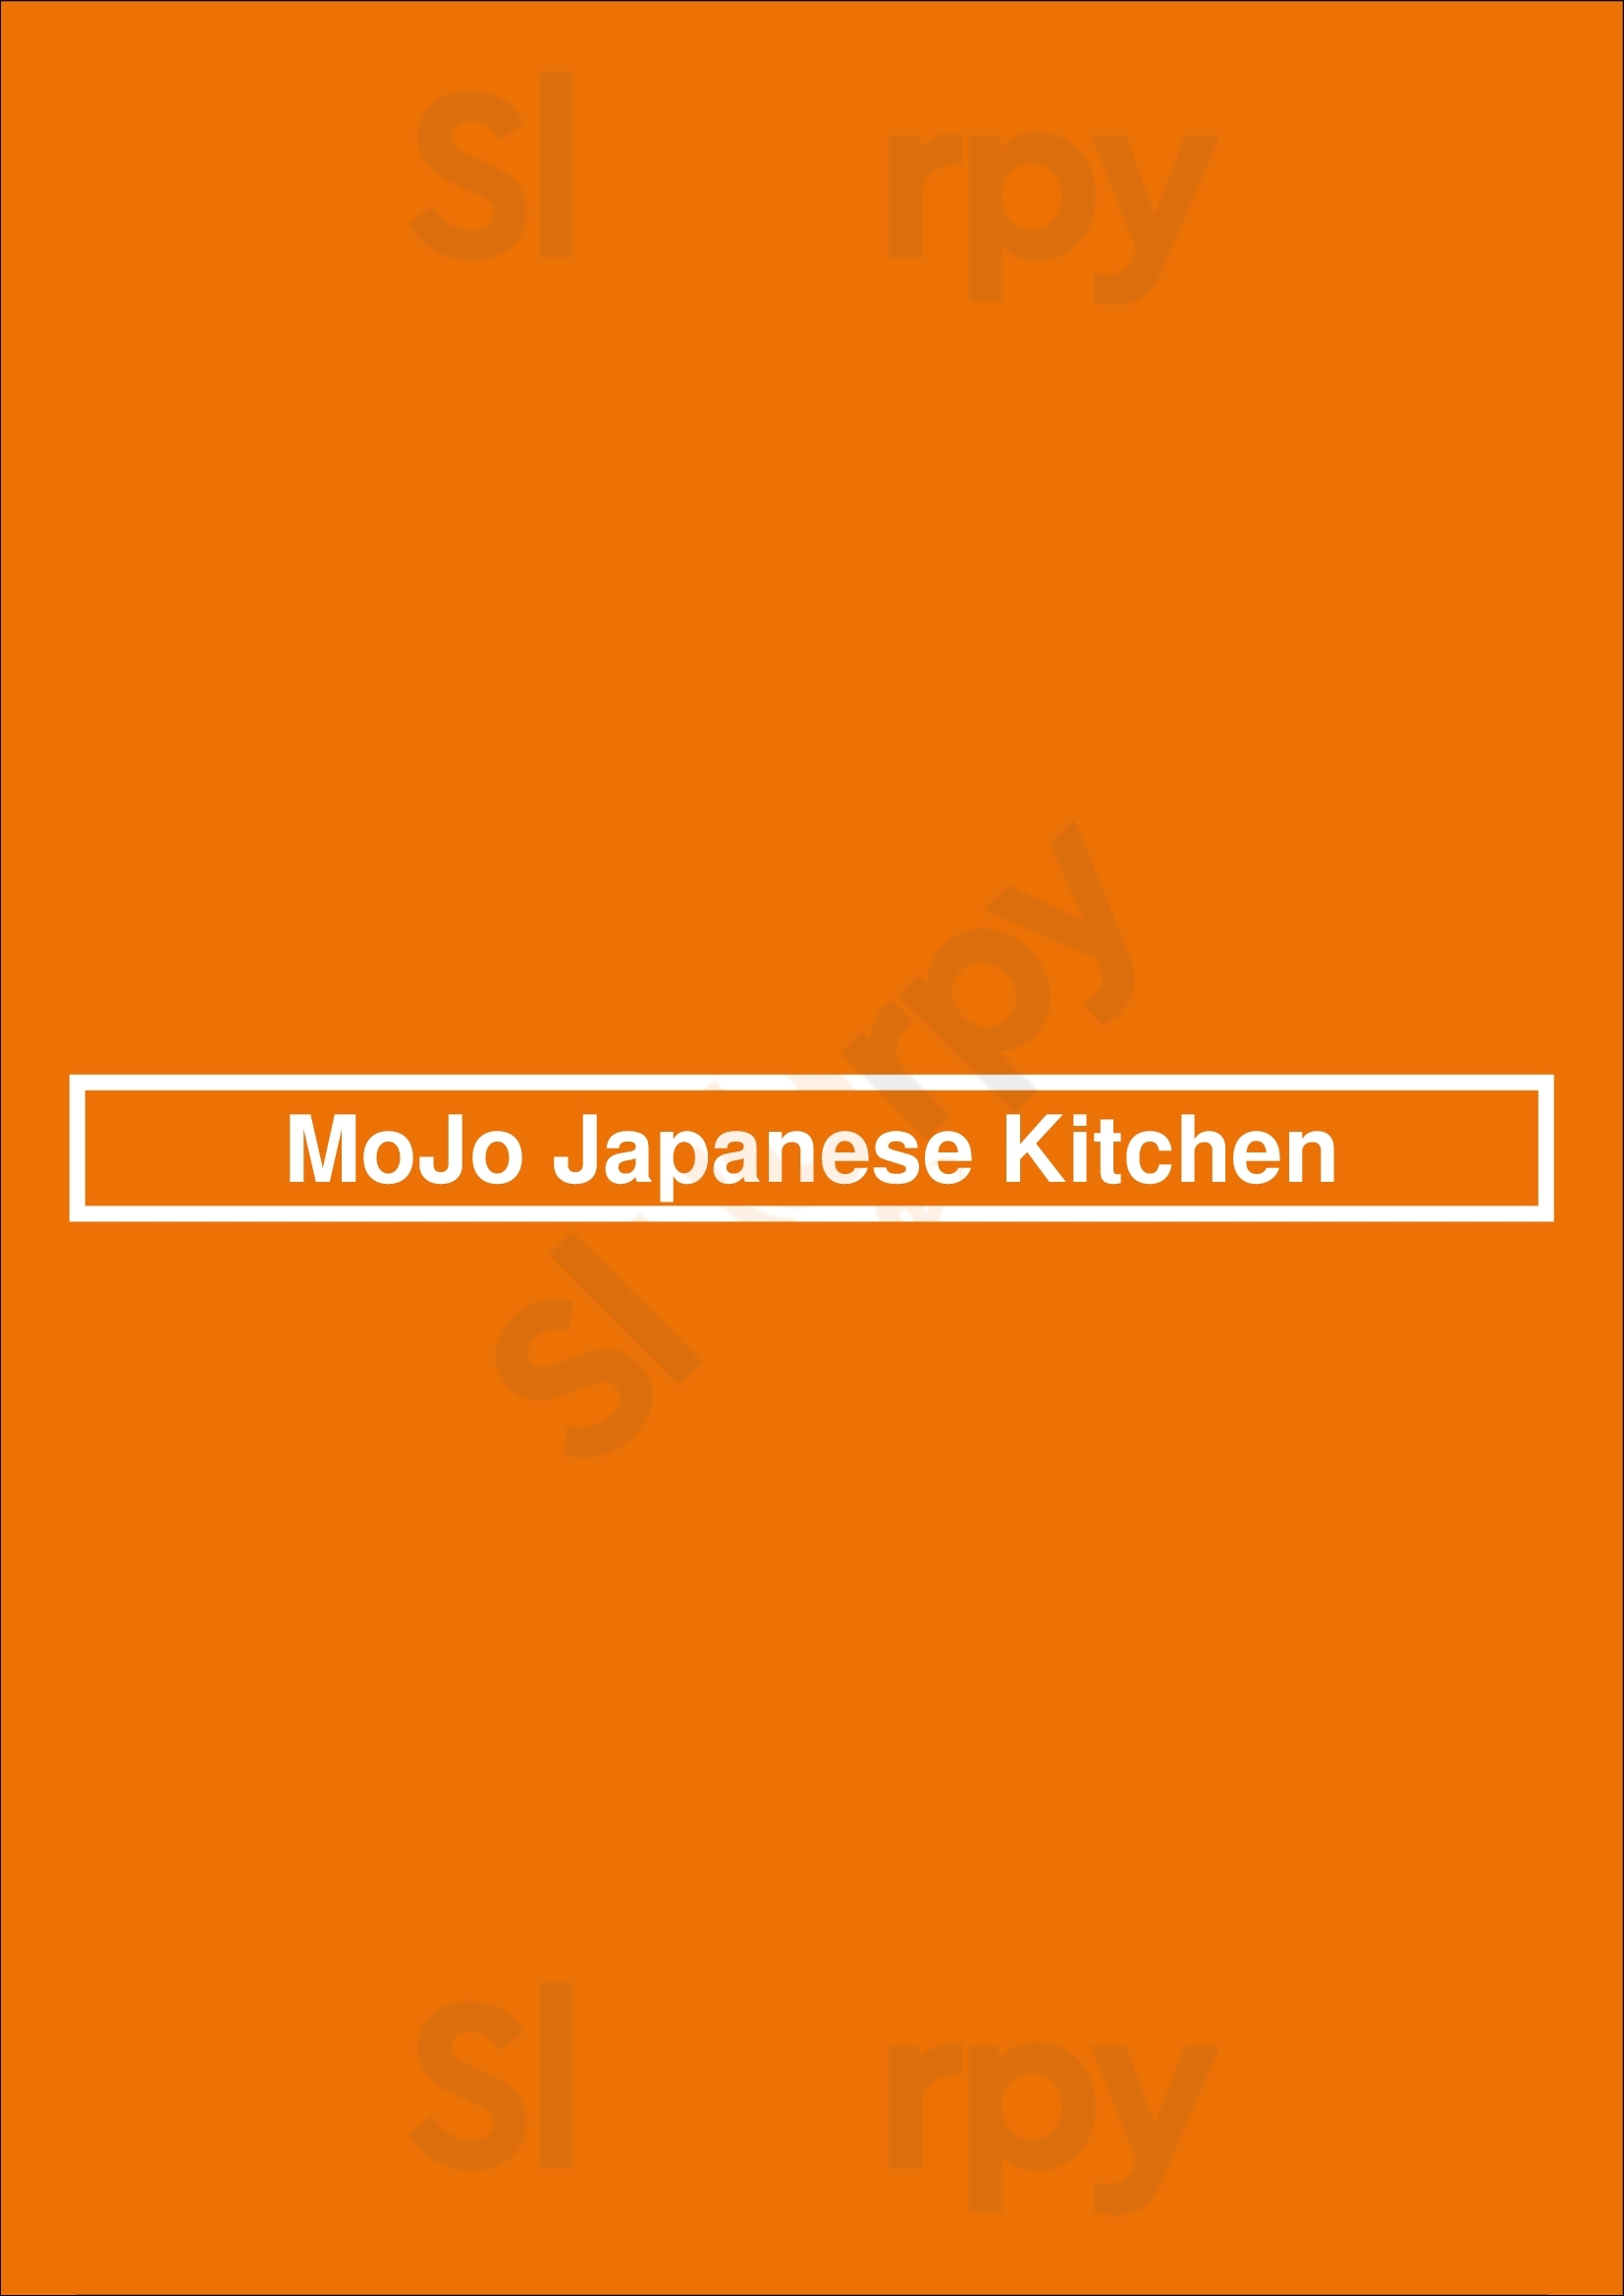 Mojo Japanese Kitchen Hilversum Menu - 1